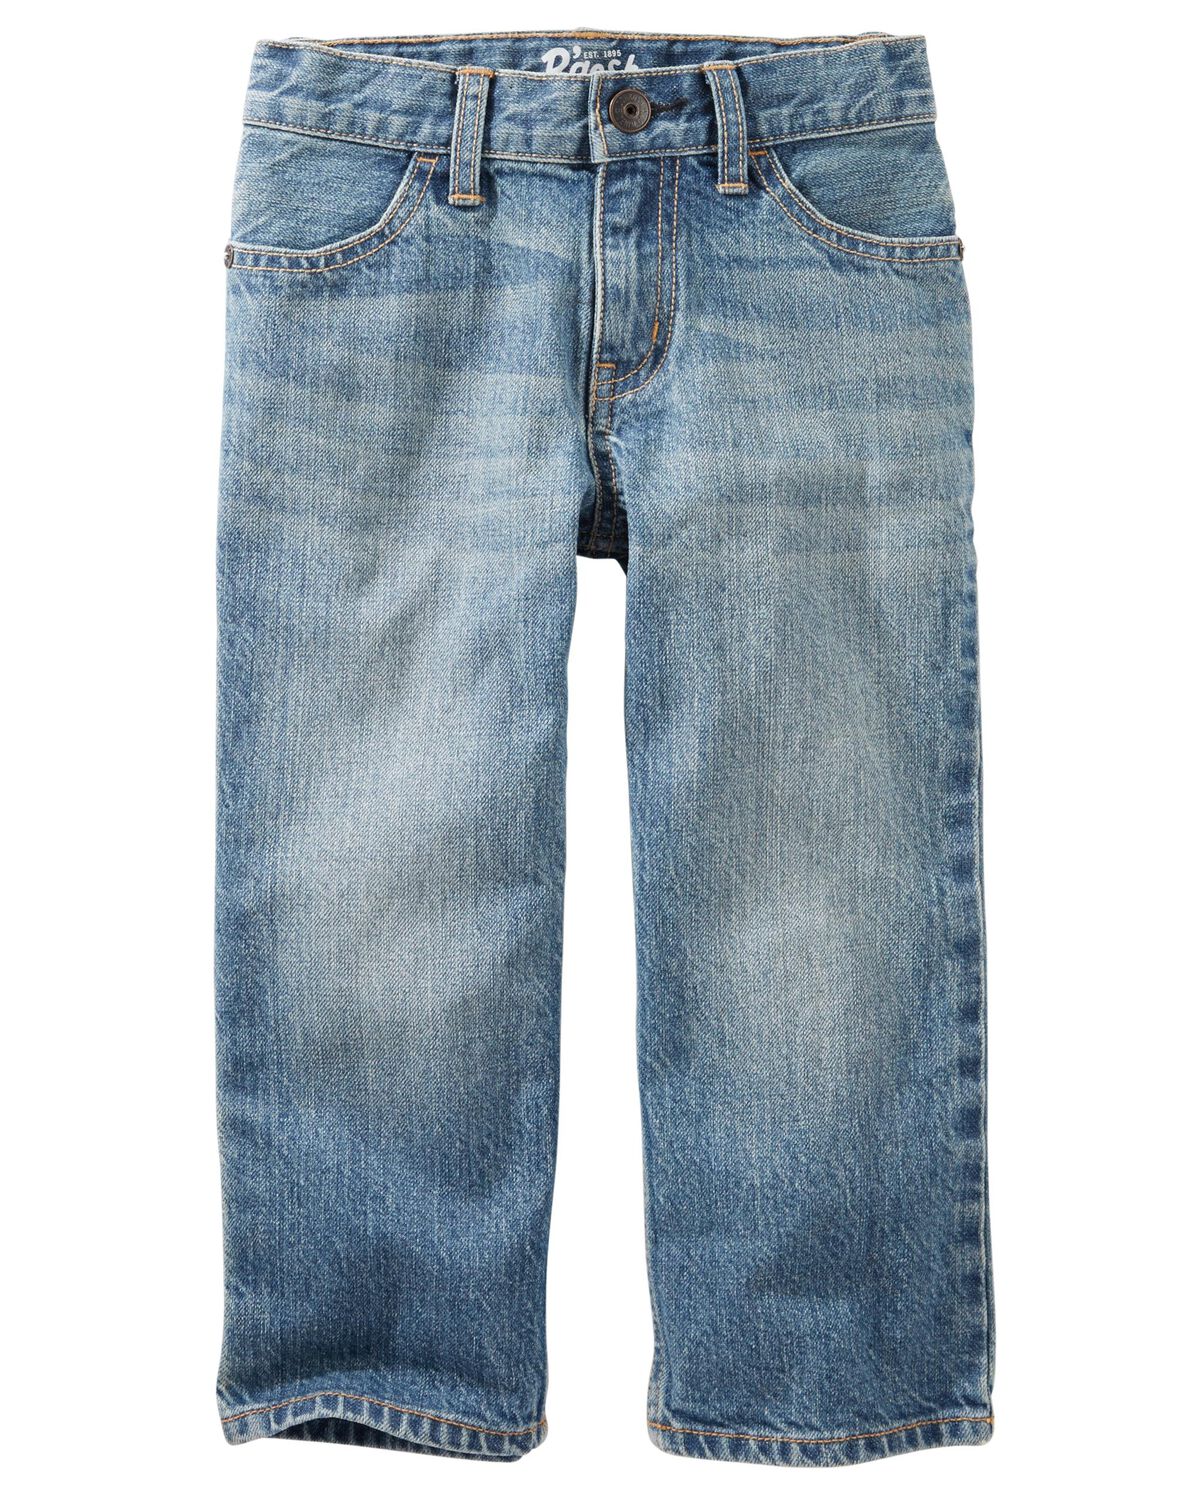 Classic Jeans - Natural Indigo Wash